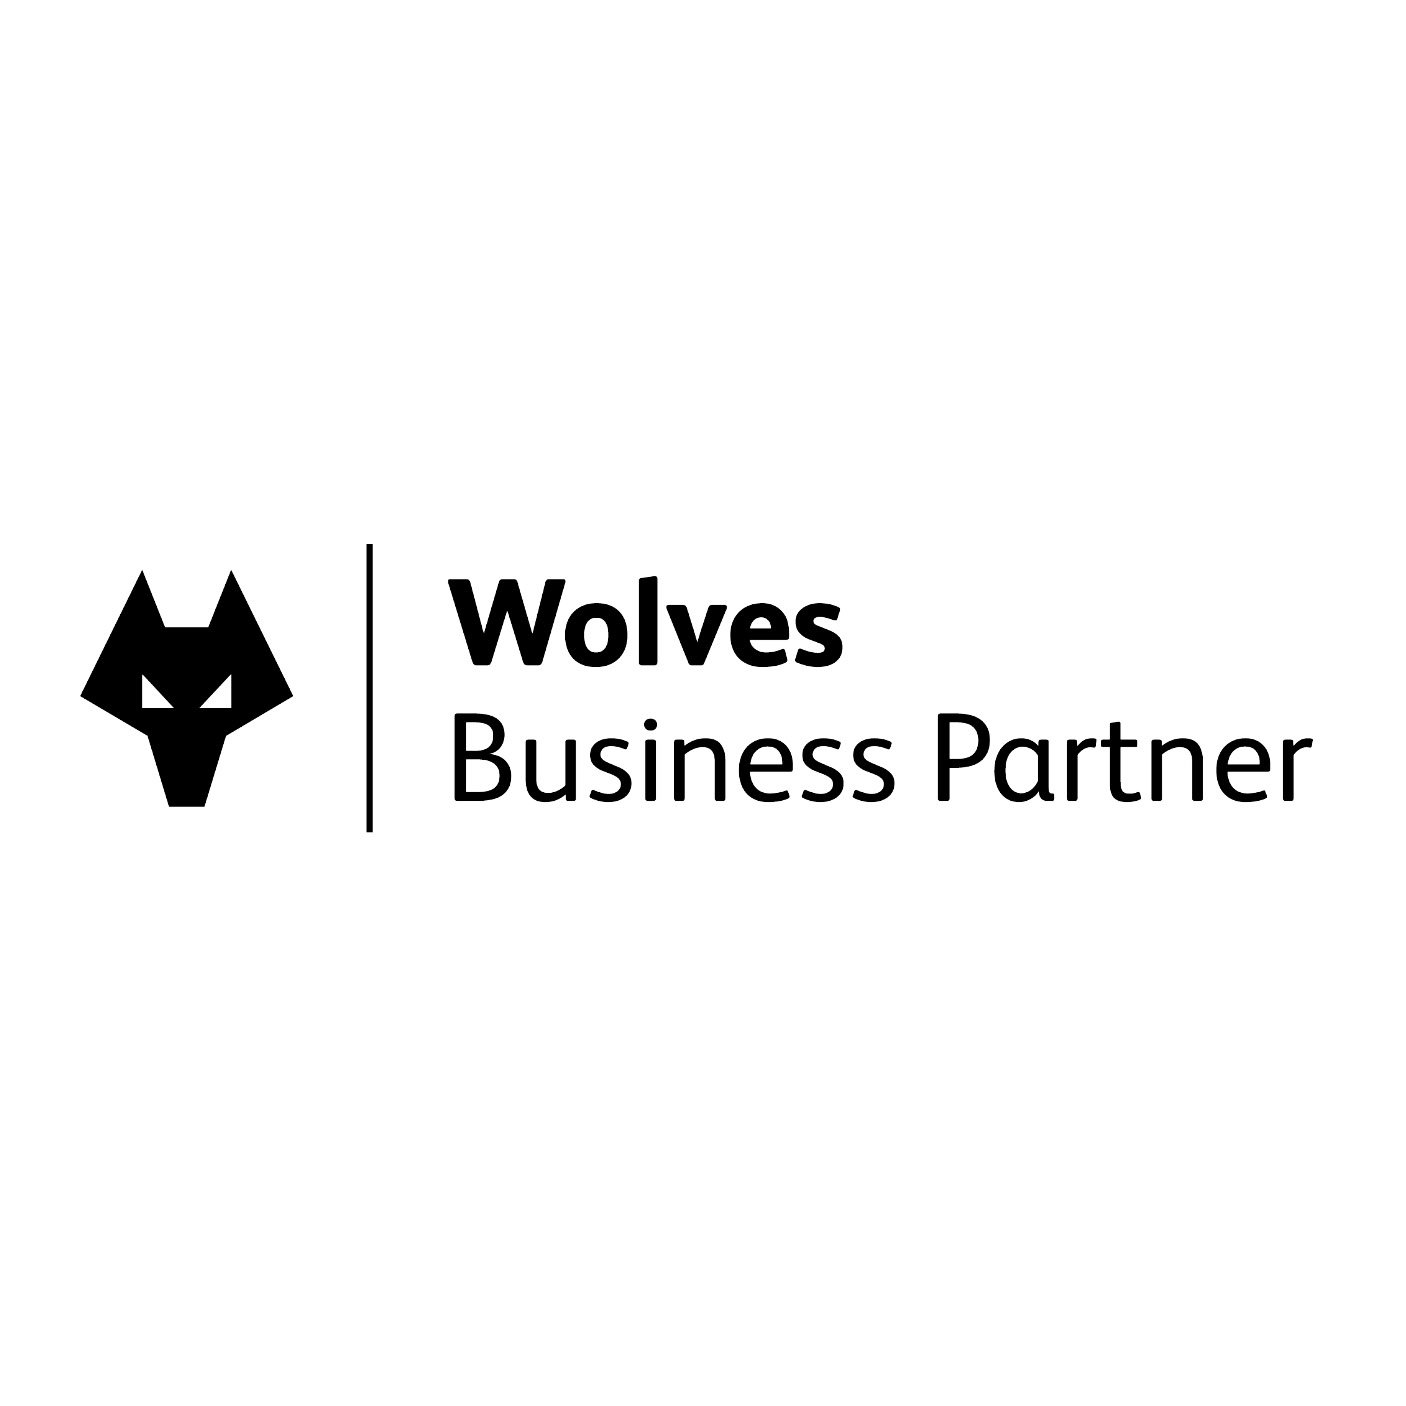 Wolves Business Partnership